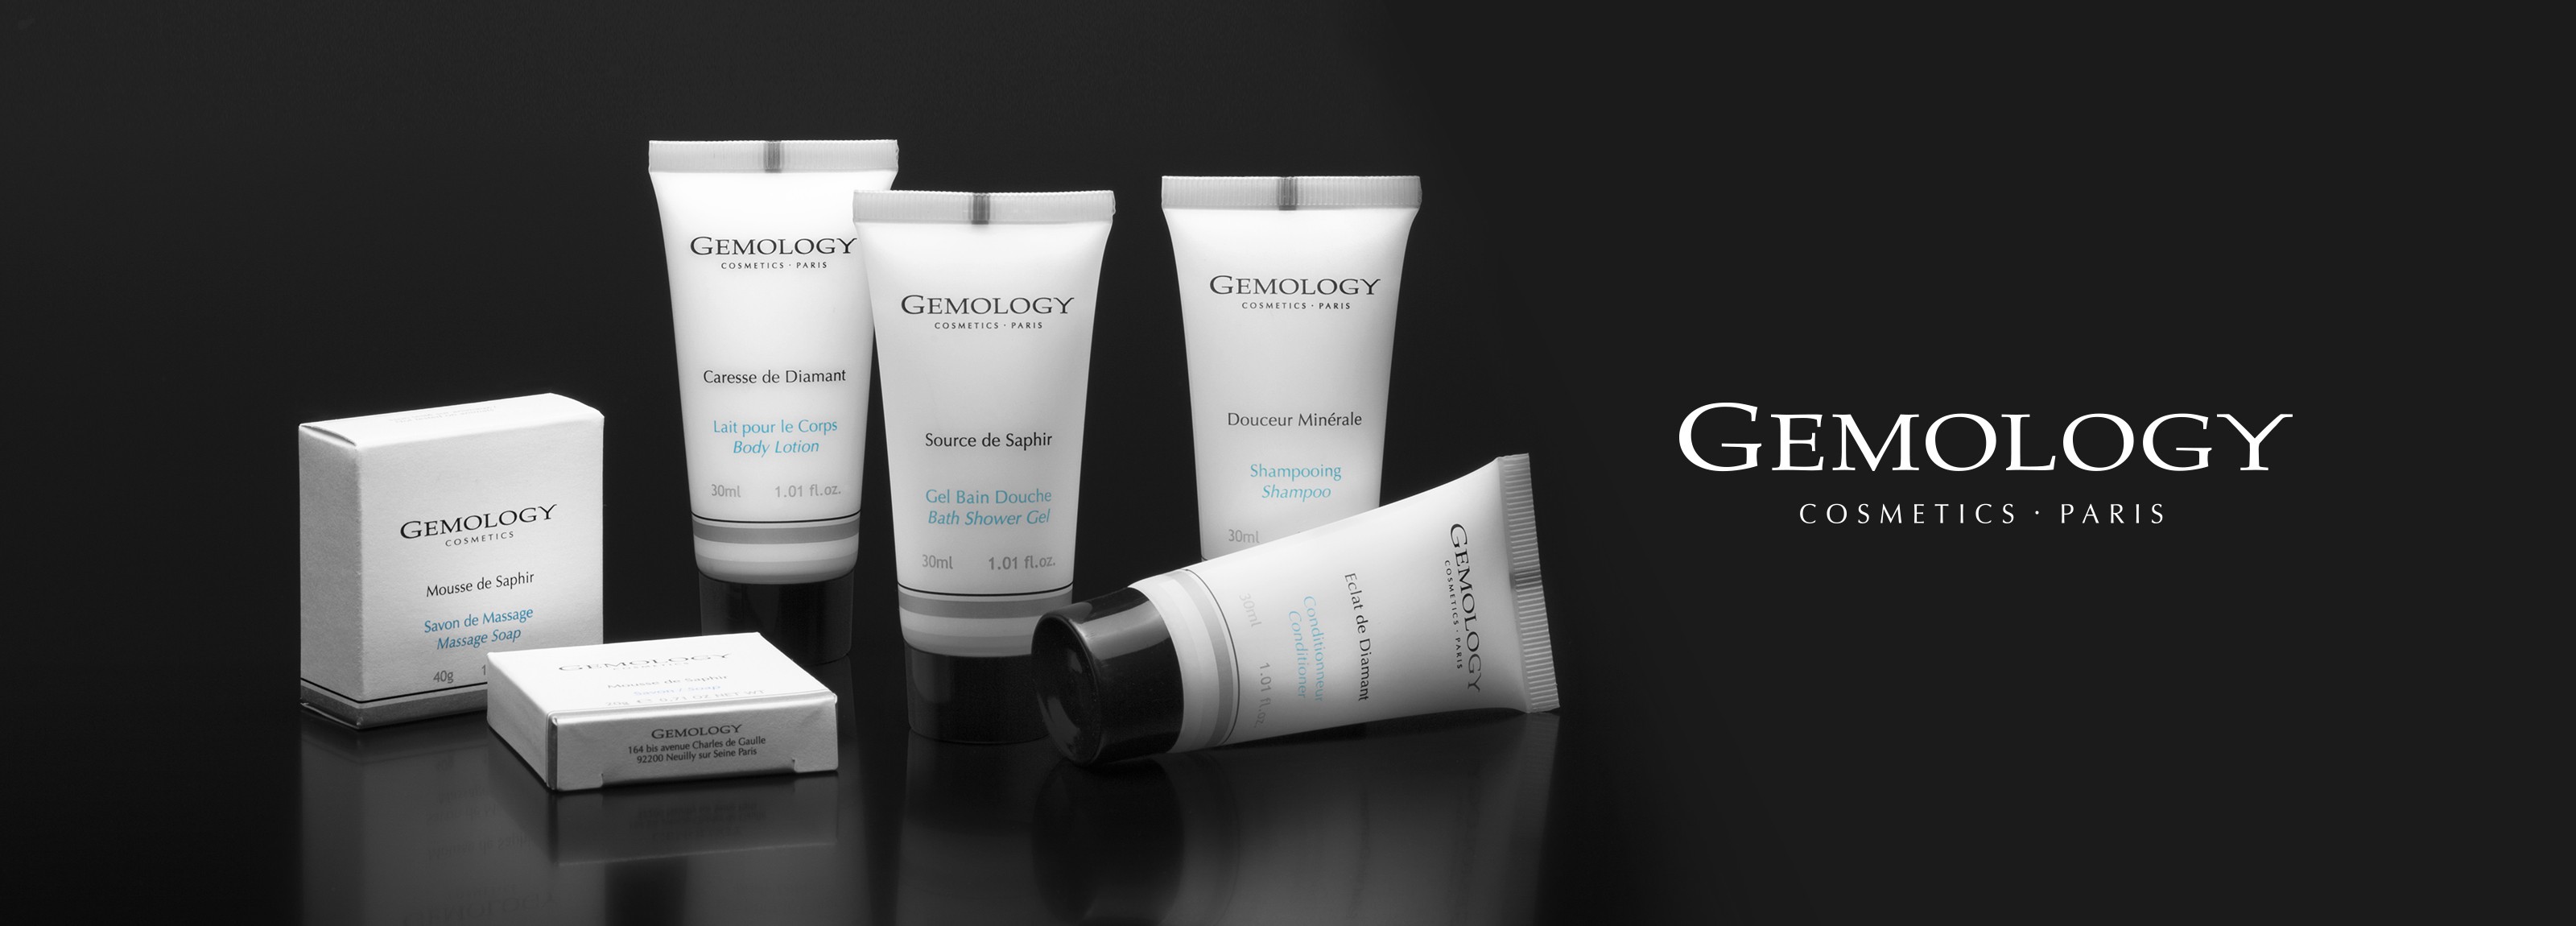 gemology bathroom products and logo